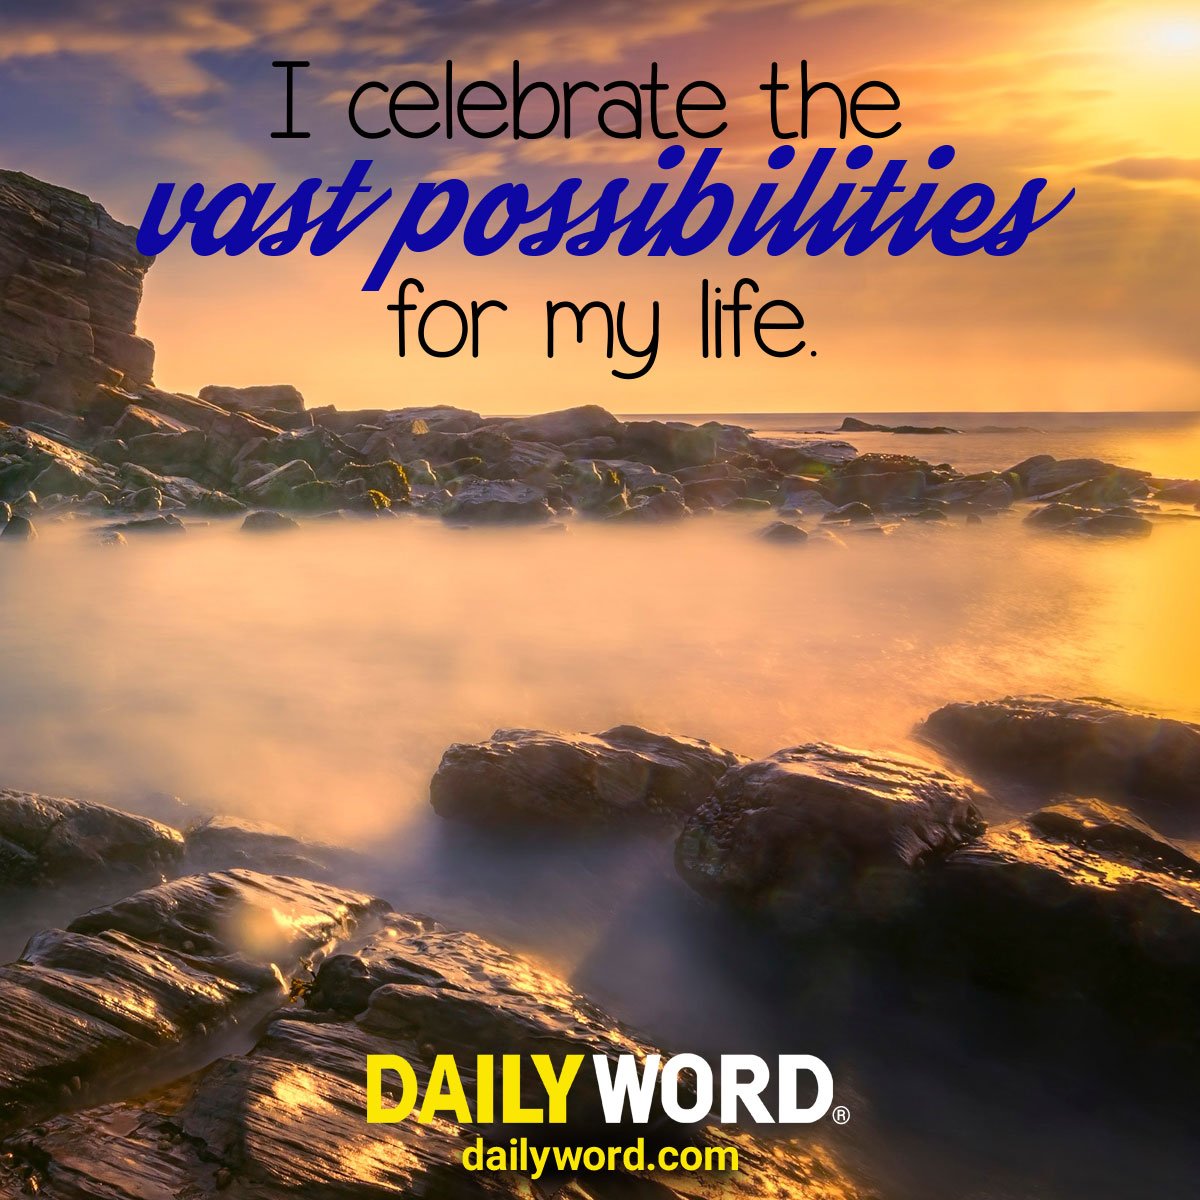 World Day of Prayer - I celebrate the vast possibilities for my life.

bit.ly/32ke24j

#WorldDayOfPrayer #inspiration #unity #newthought #dailyword #guidance #dailyinspiration